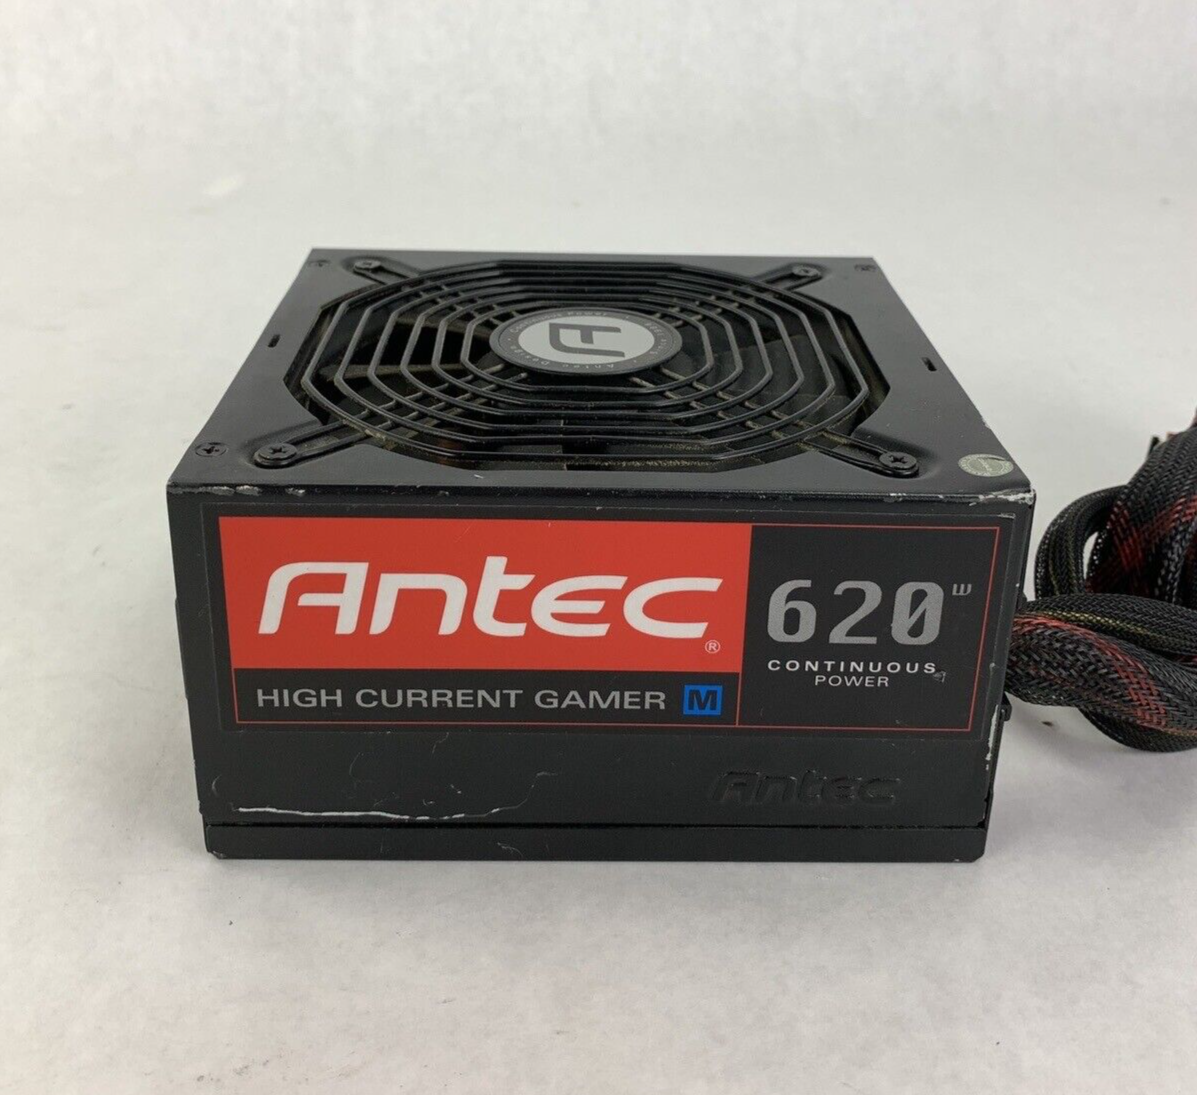 Antec HCG-620M 620W 80 Plus Bronze Power Supply High Current Gamer Series